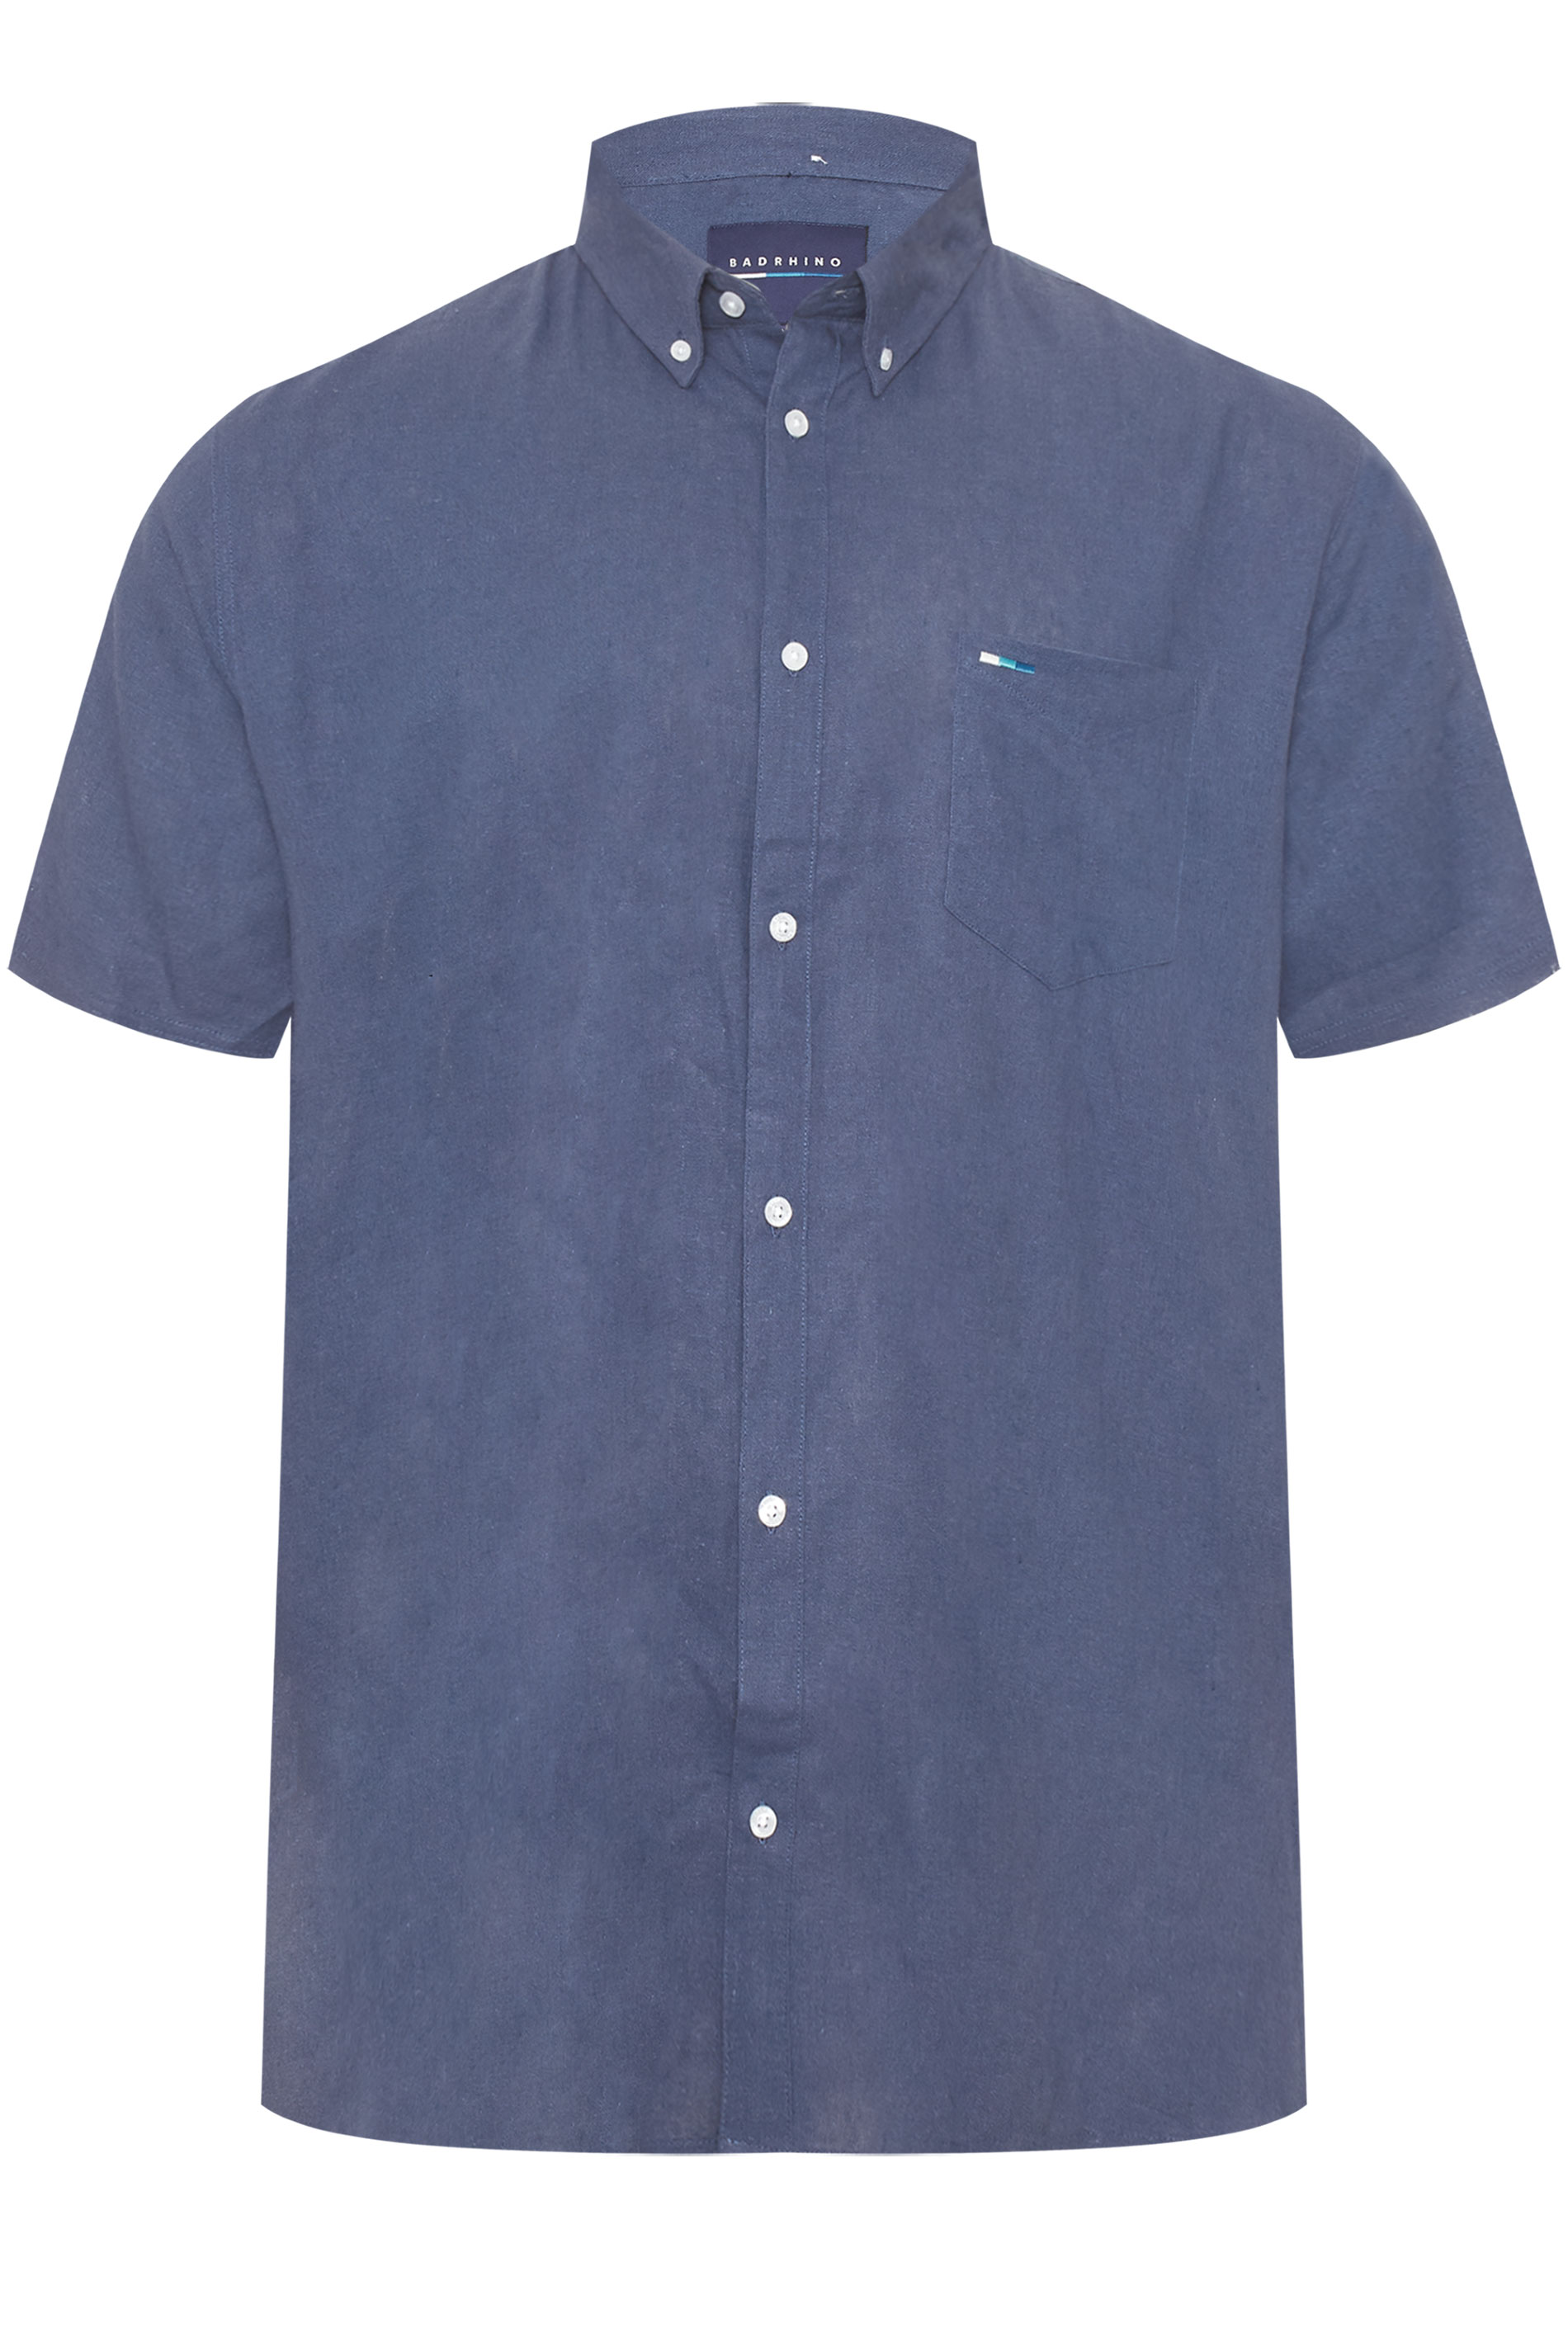 BadRhino Big & Tall Blue Linen Shirt 1